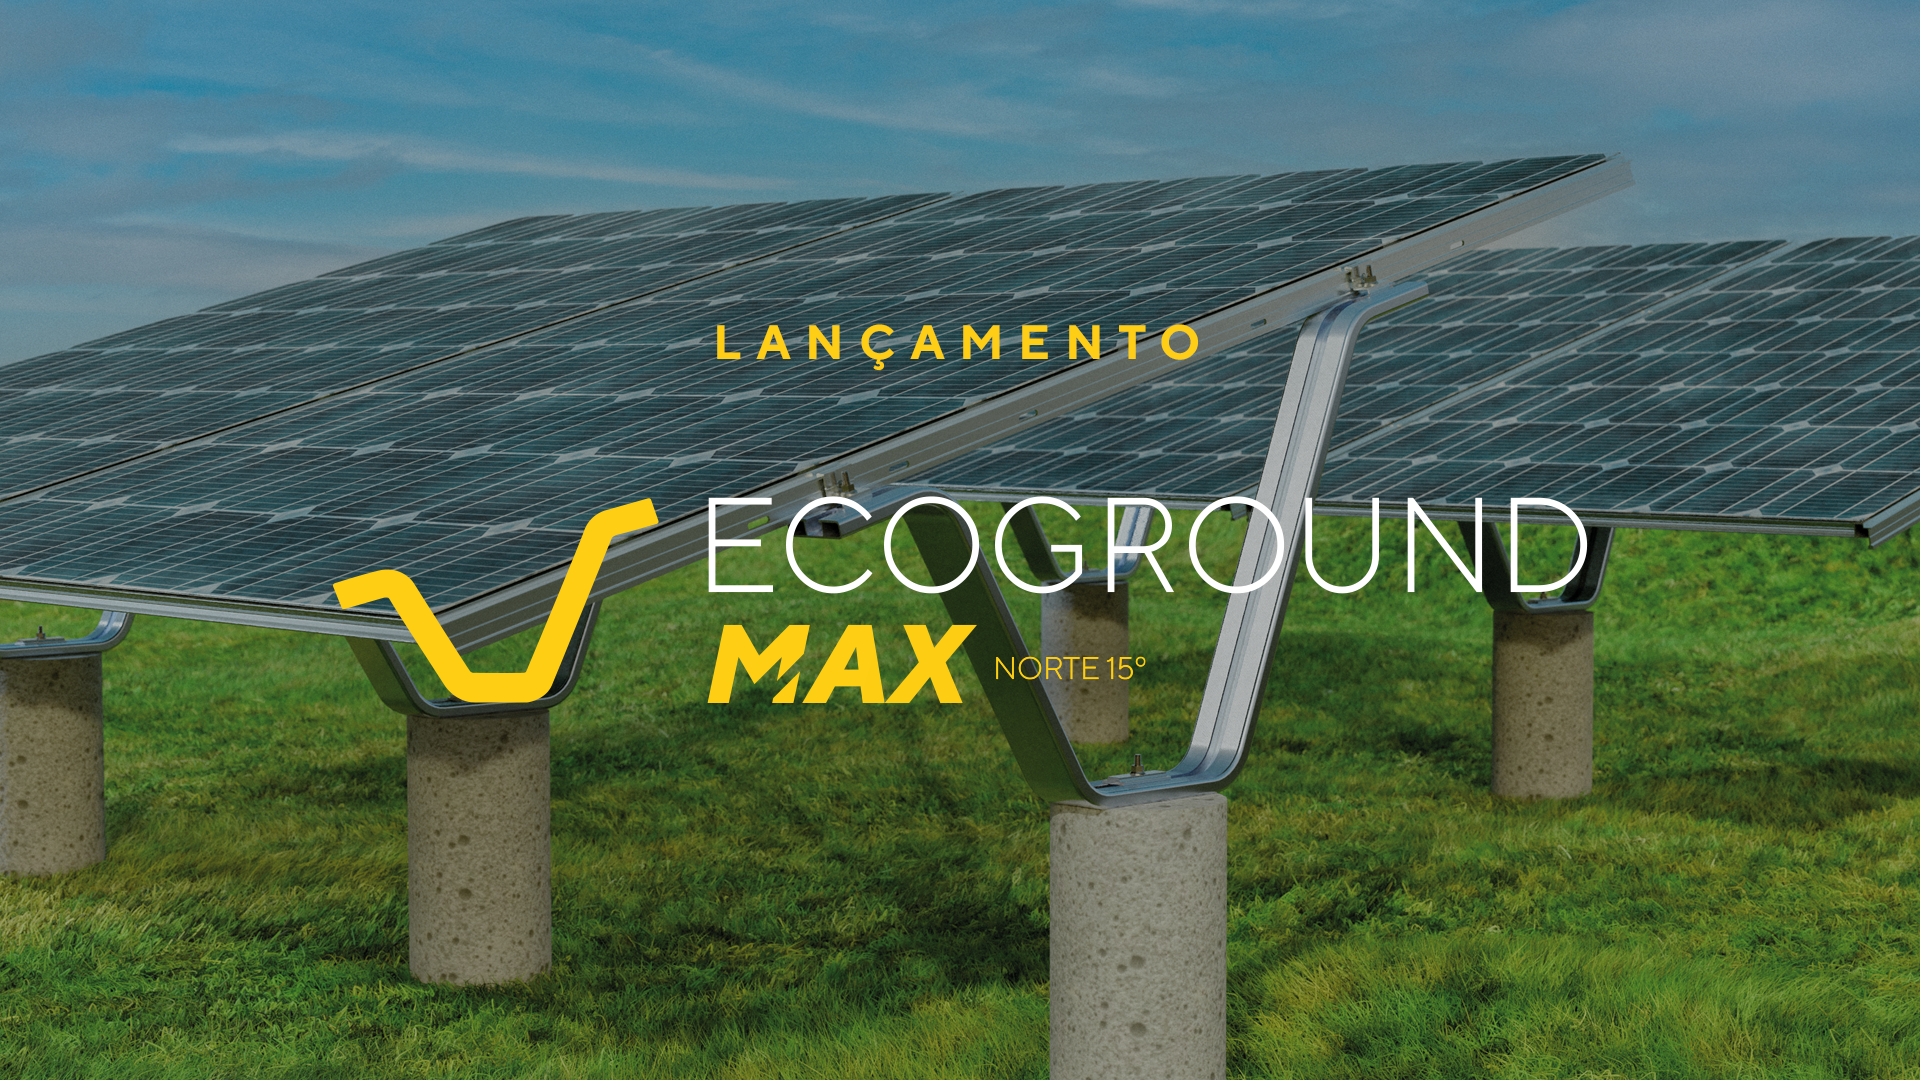 Thumbnail: Lançamento: Ecouground Max, novo suporte para grandes painéis solares